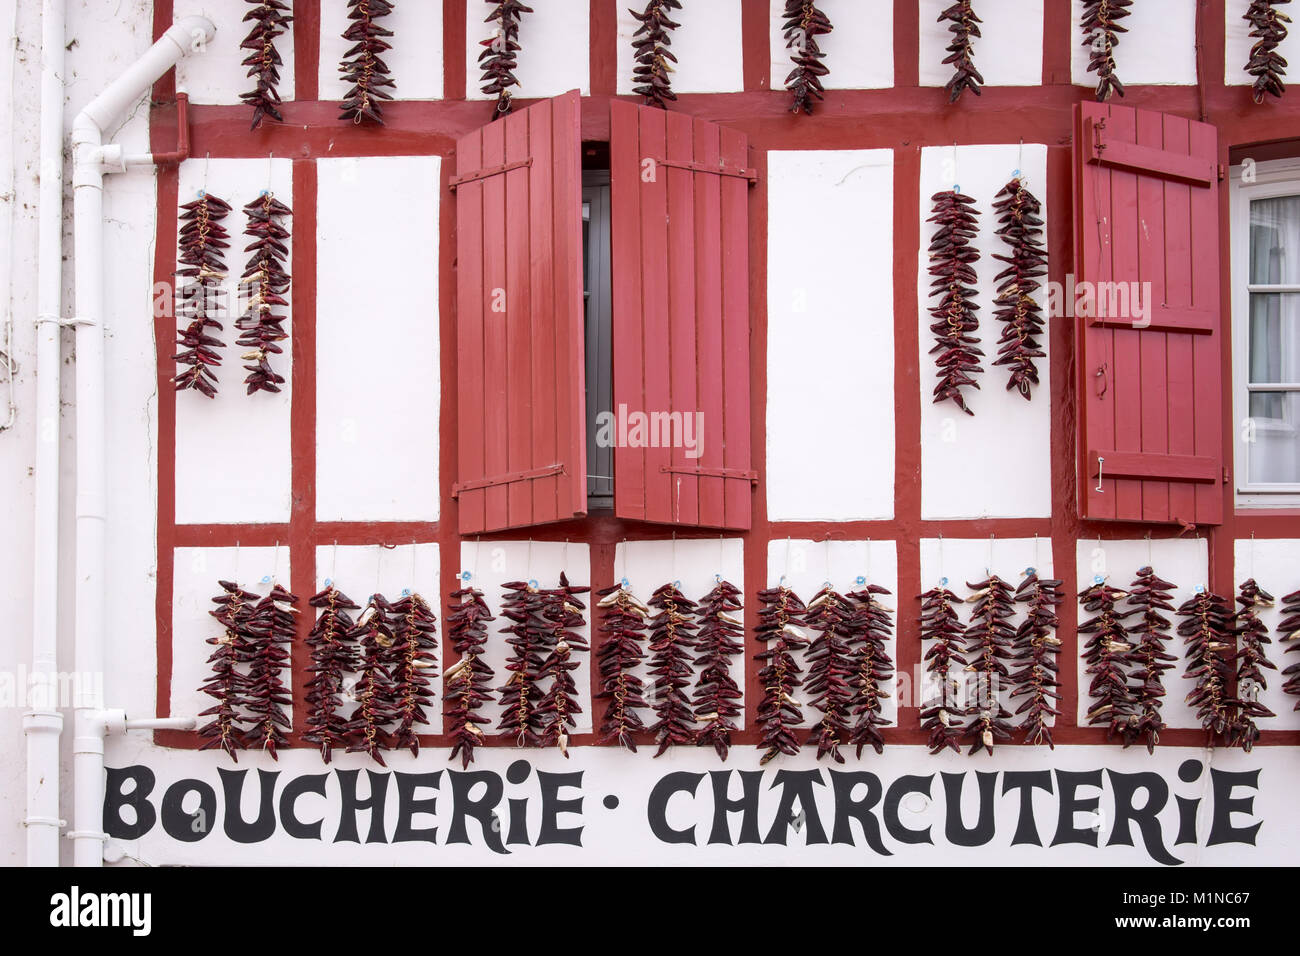 Espelette pepper strings hanging against the facade of a butchery in Espelette, France Stock Photo